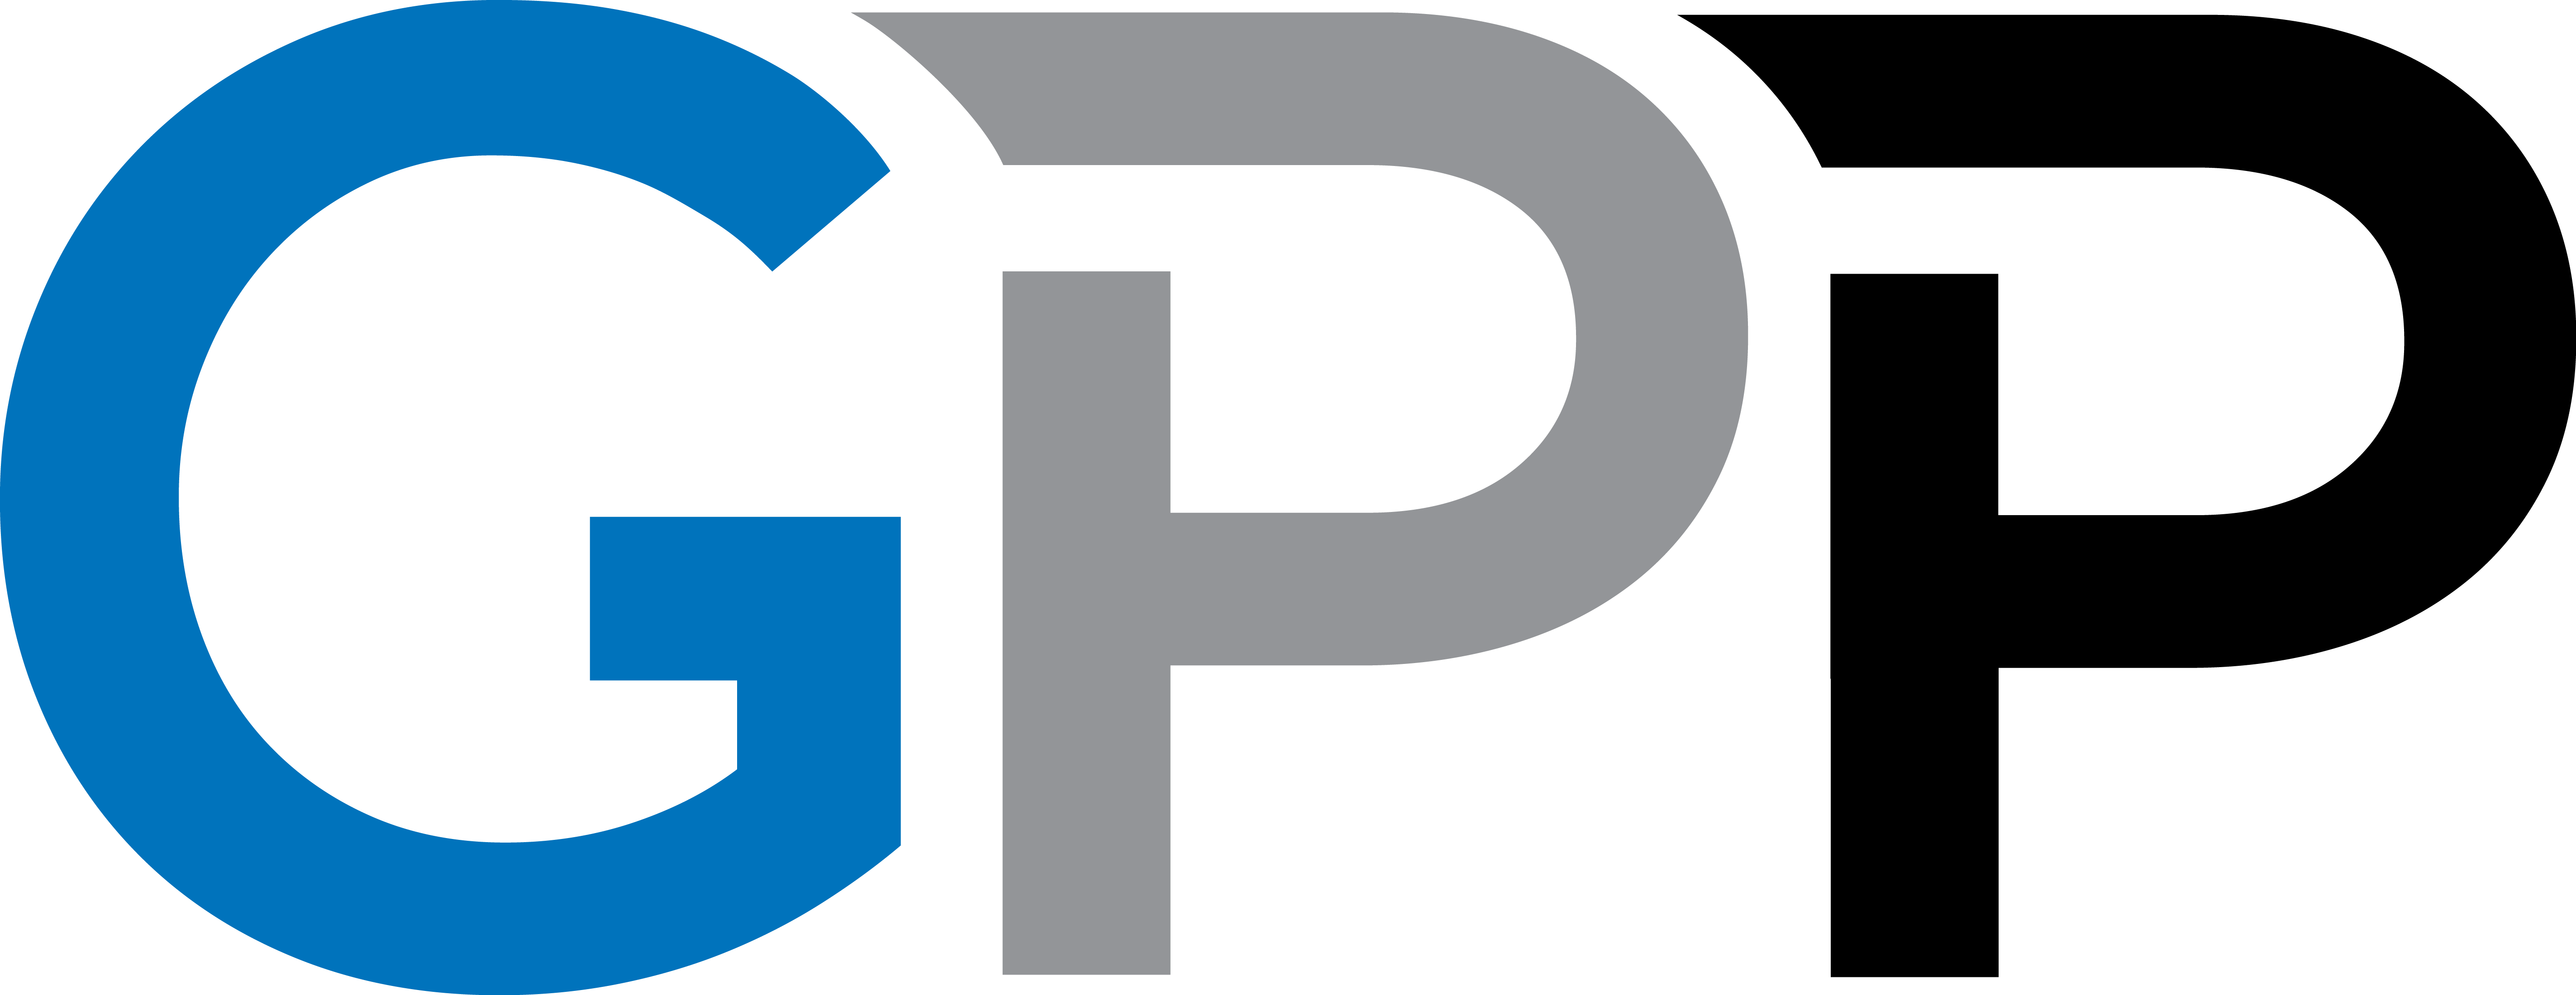 GPP